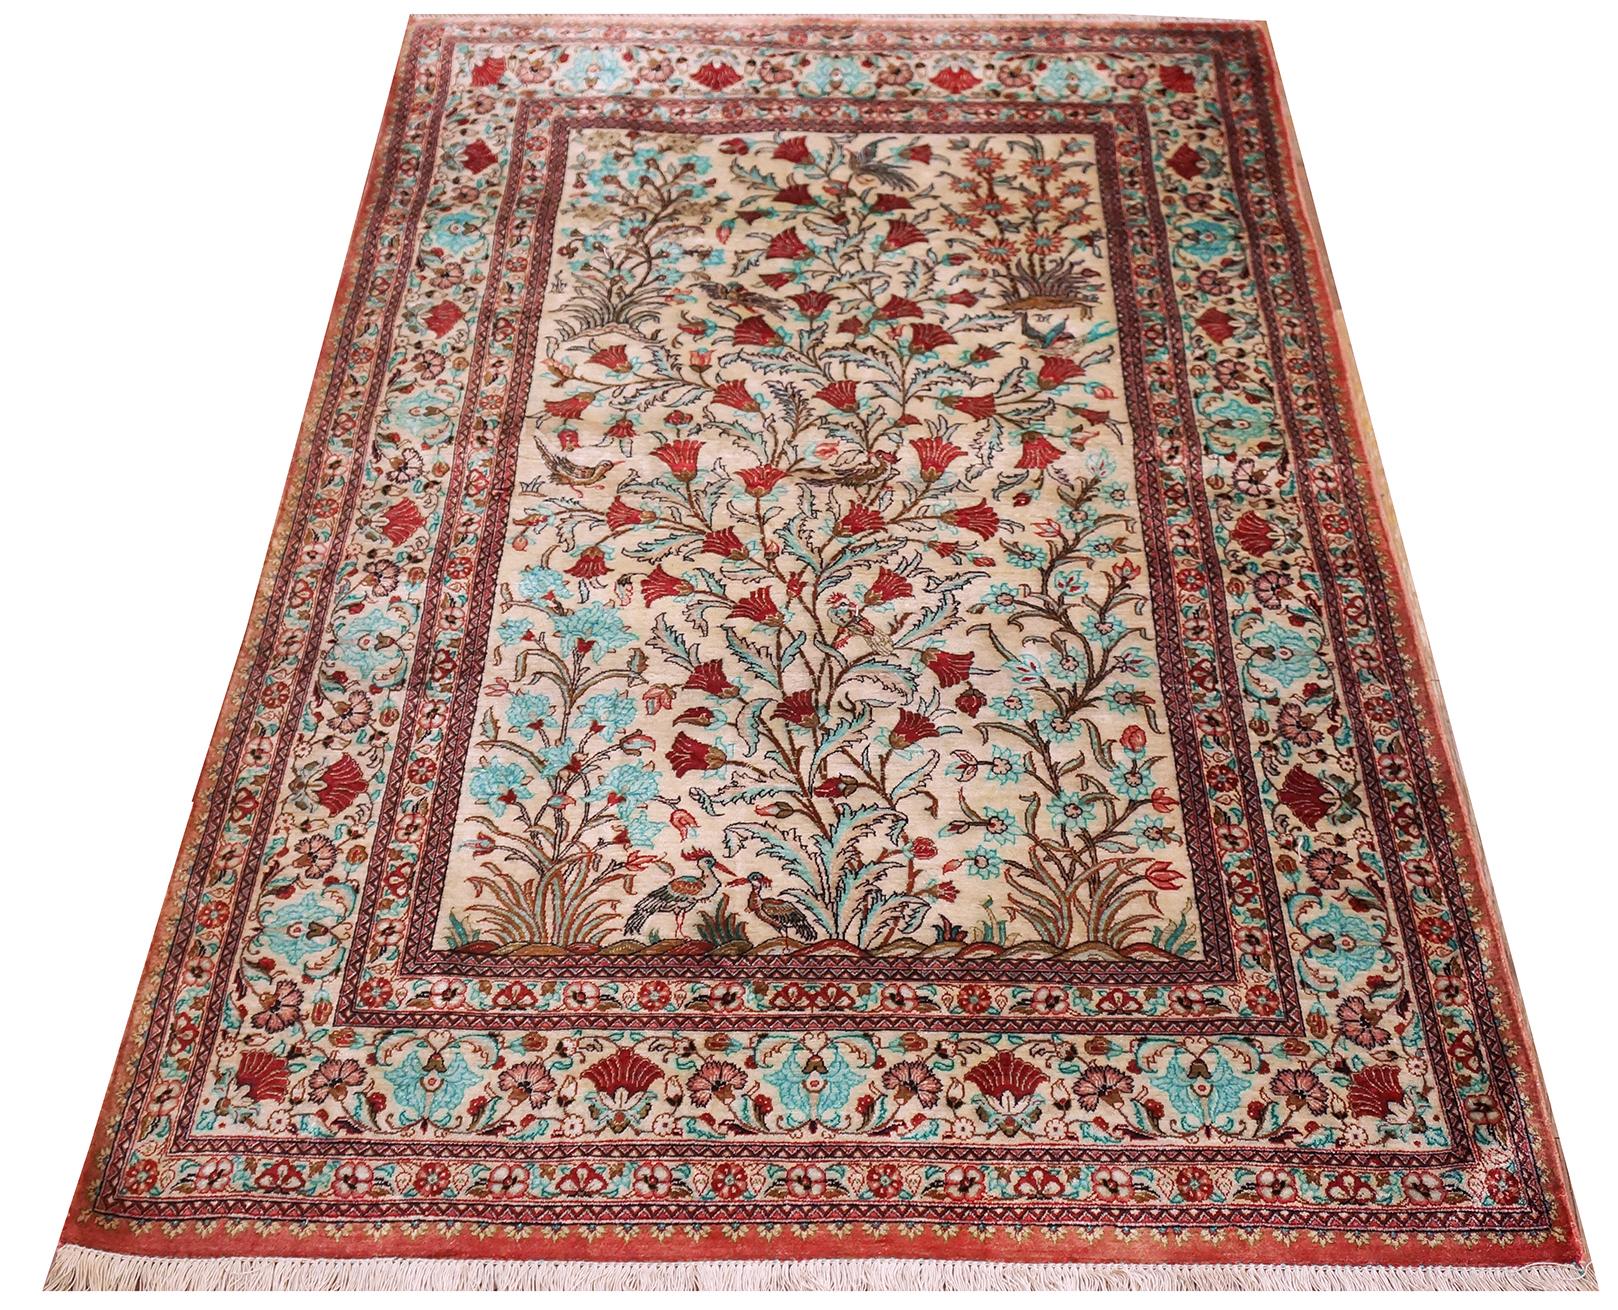 Fine natural silk handmade rug bird area rug signed high kpsi quality rug ivory.

Measures: 3'4